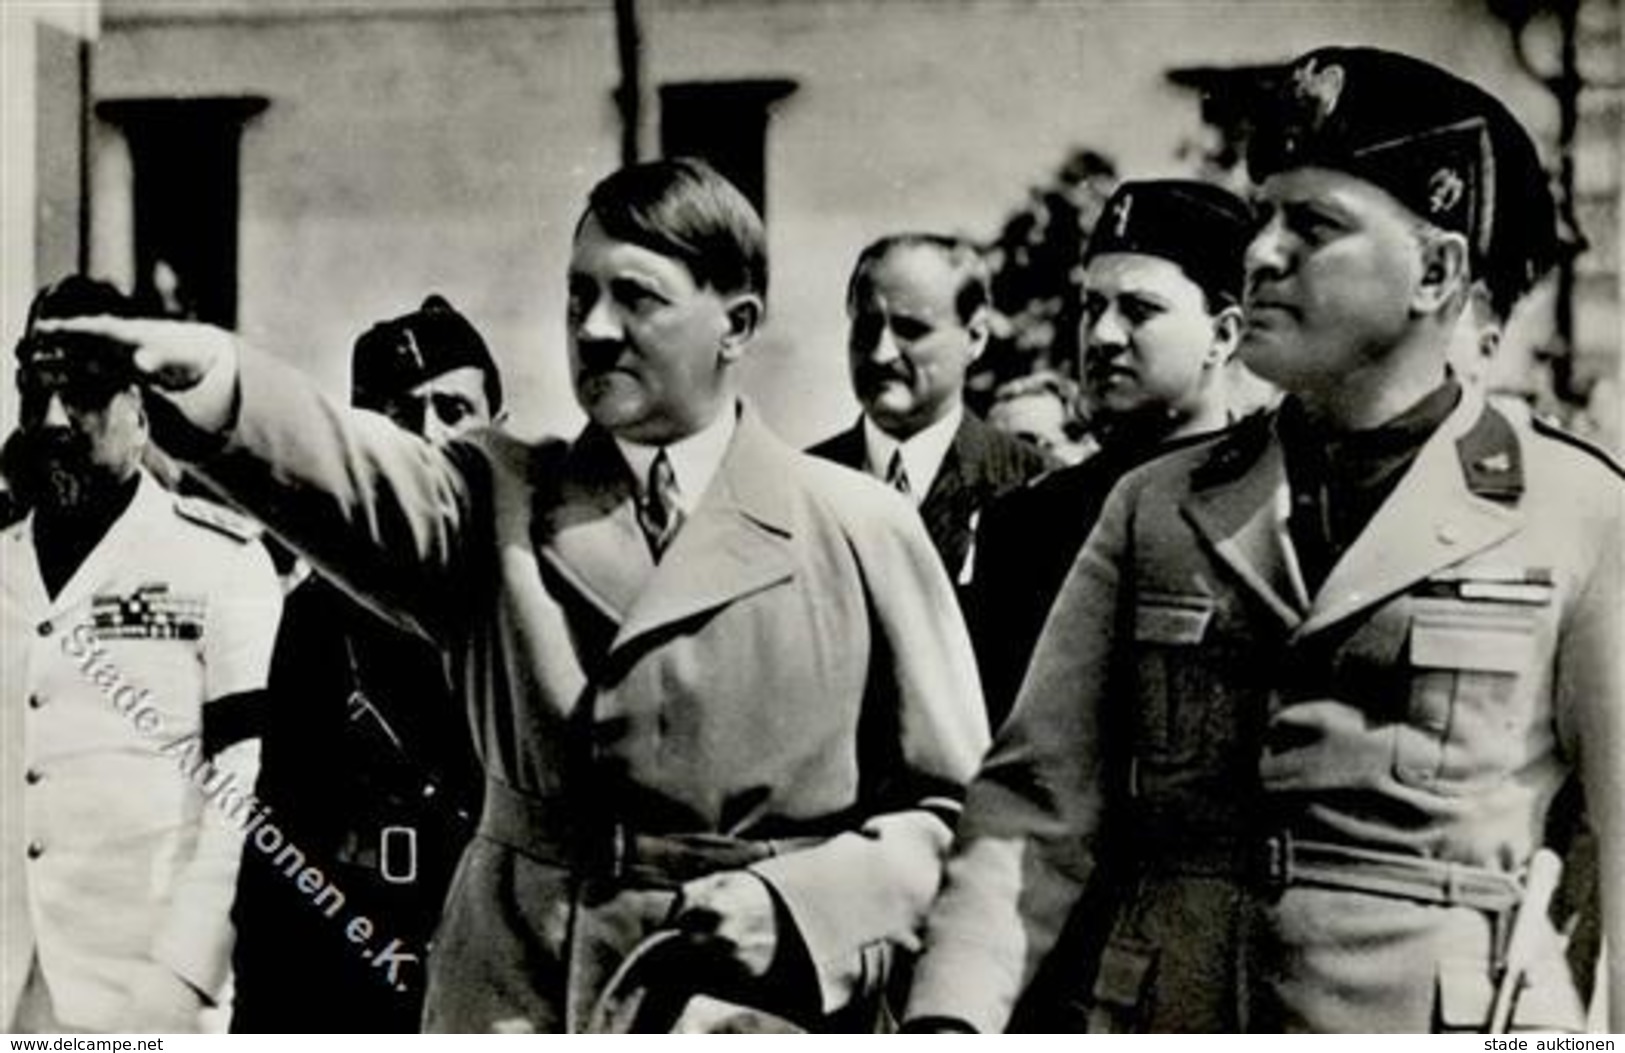 Hitler WK II Mussolini Foto AK I-II - Guerre 1939-45